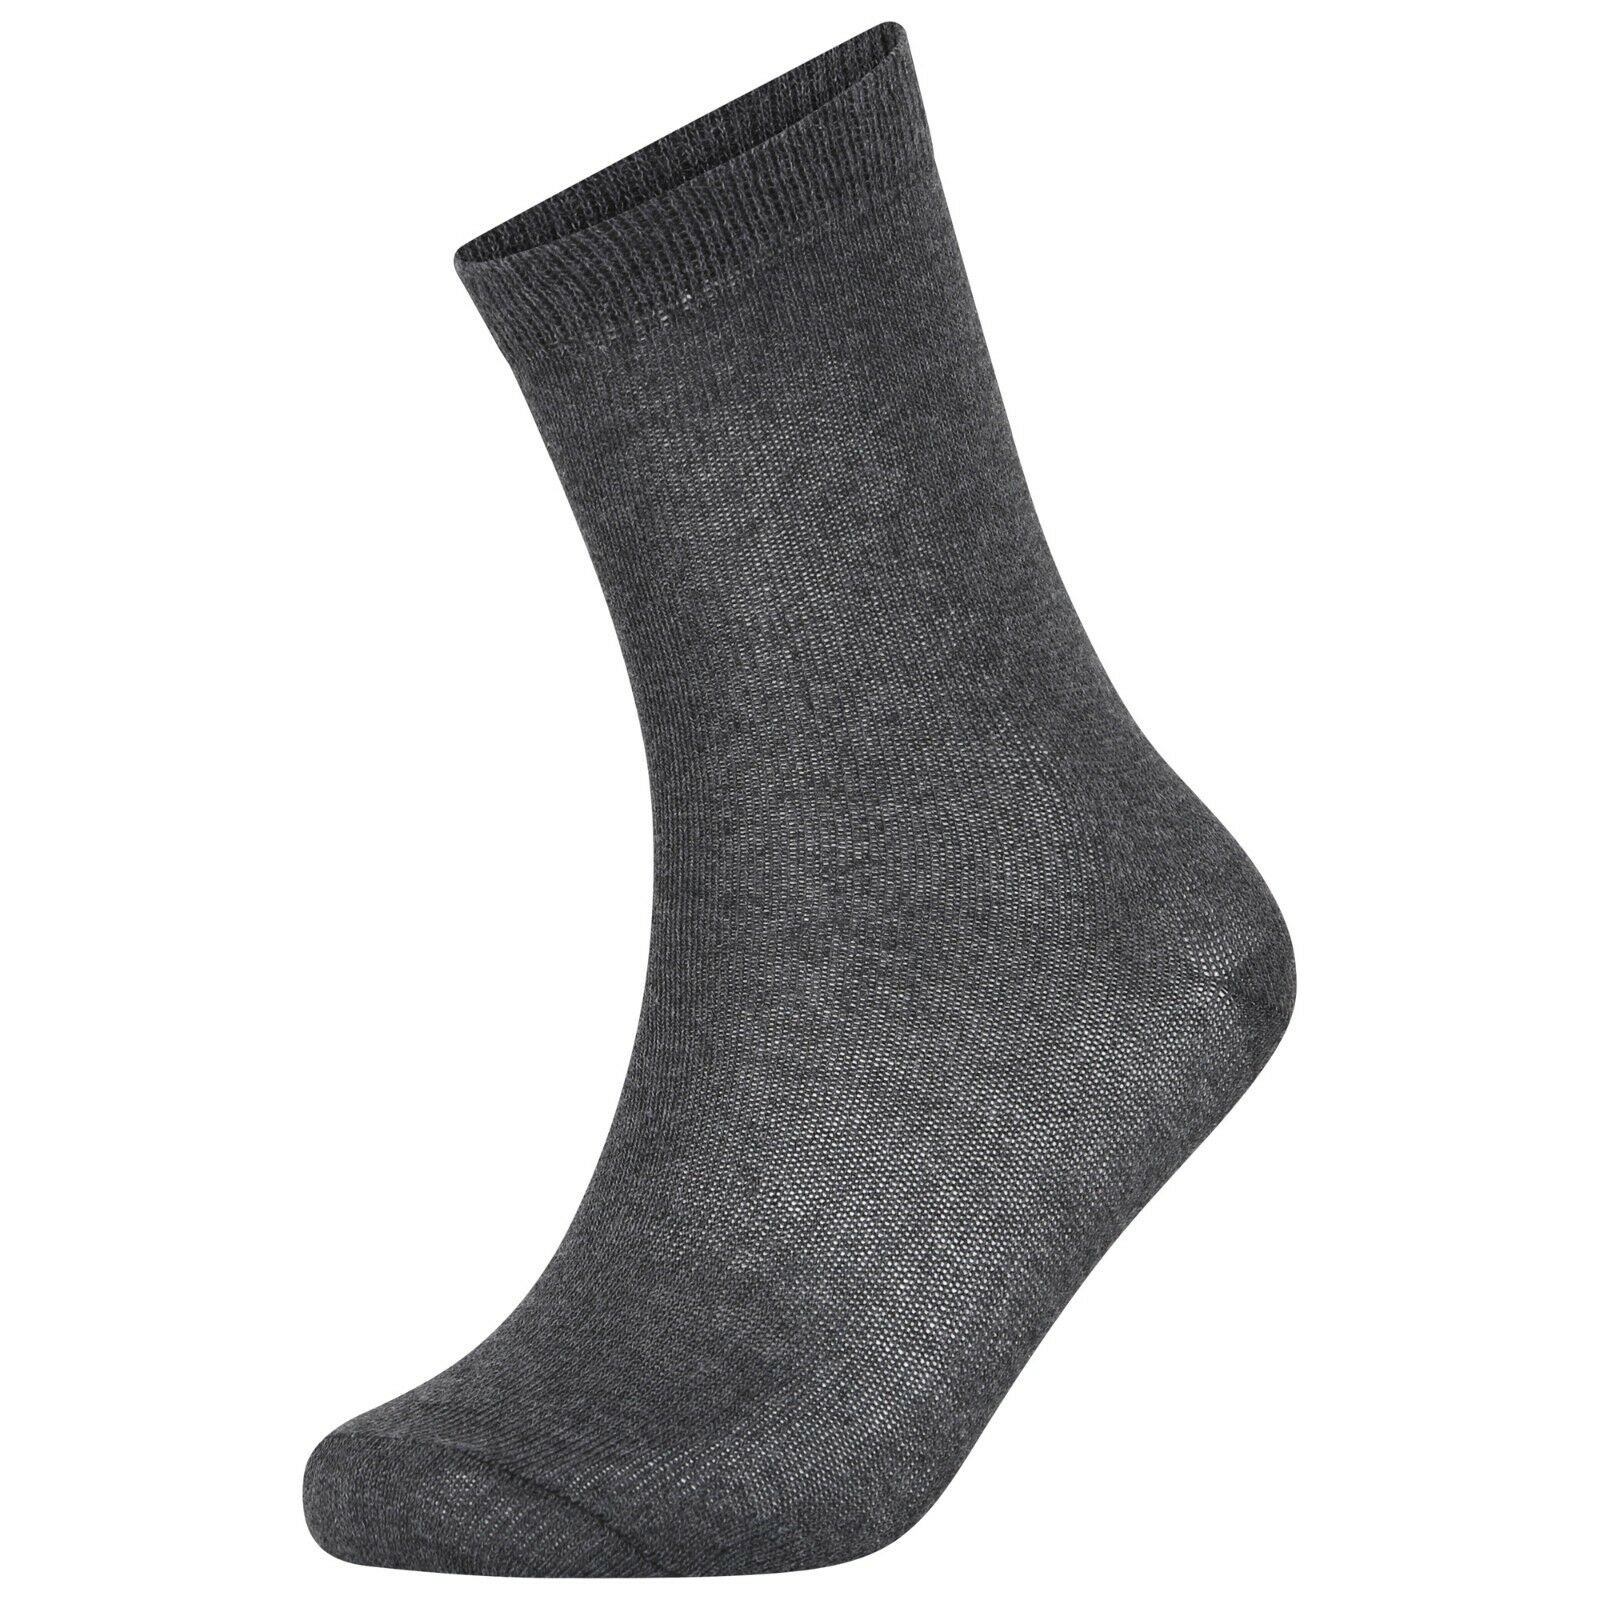 Girls Boys Unisex Children's Kids Ankle Socks Plain Cotton Mix  Back to School Socks 3 Pairs -Grey / Charcoal